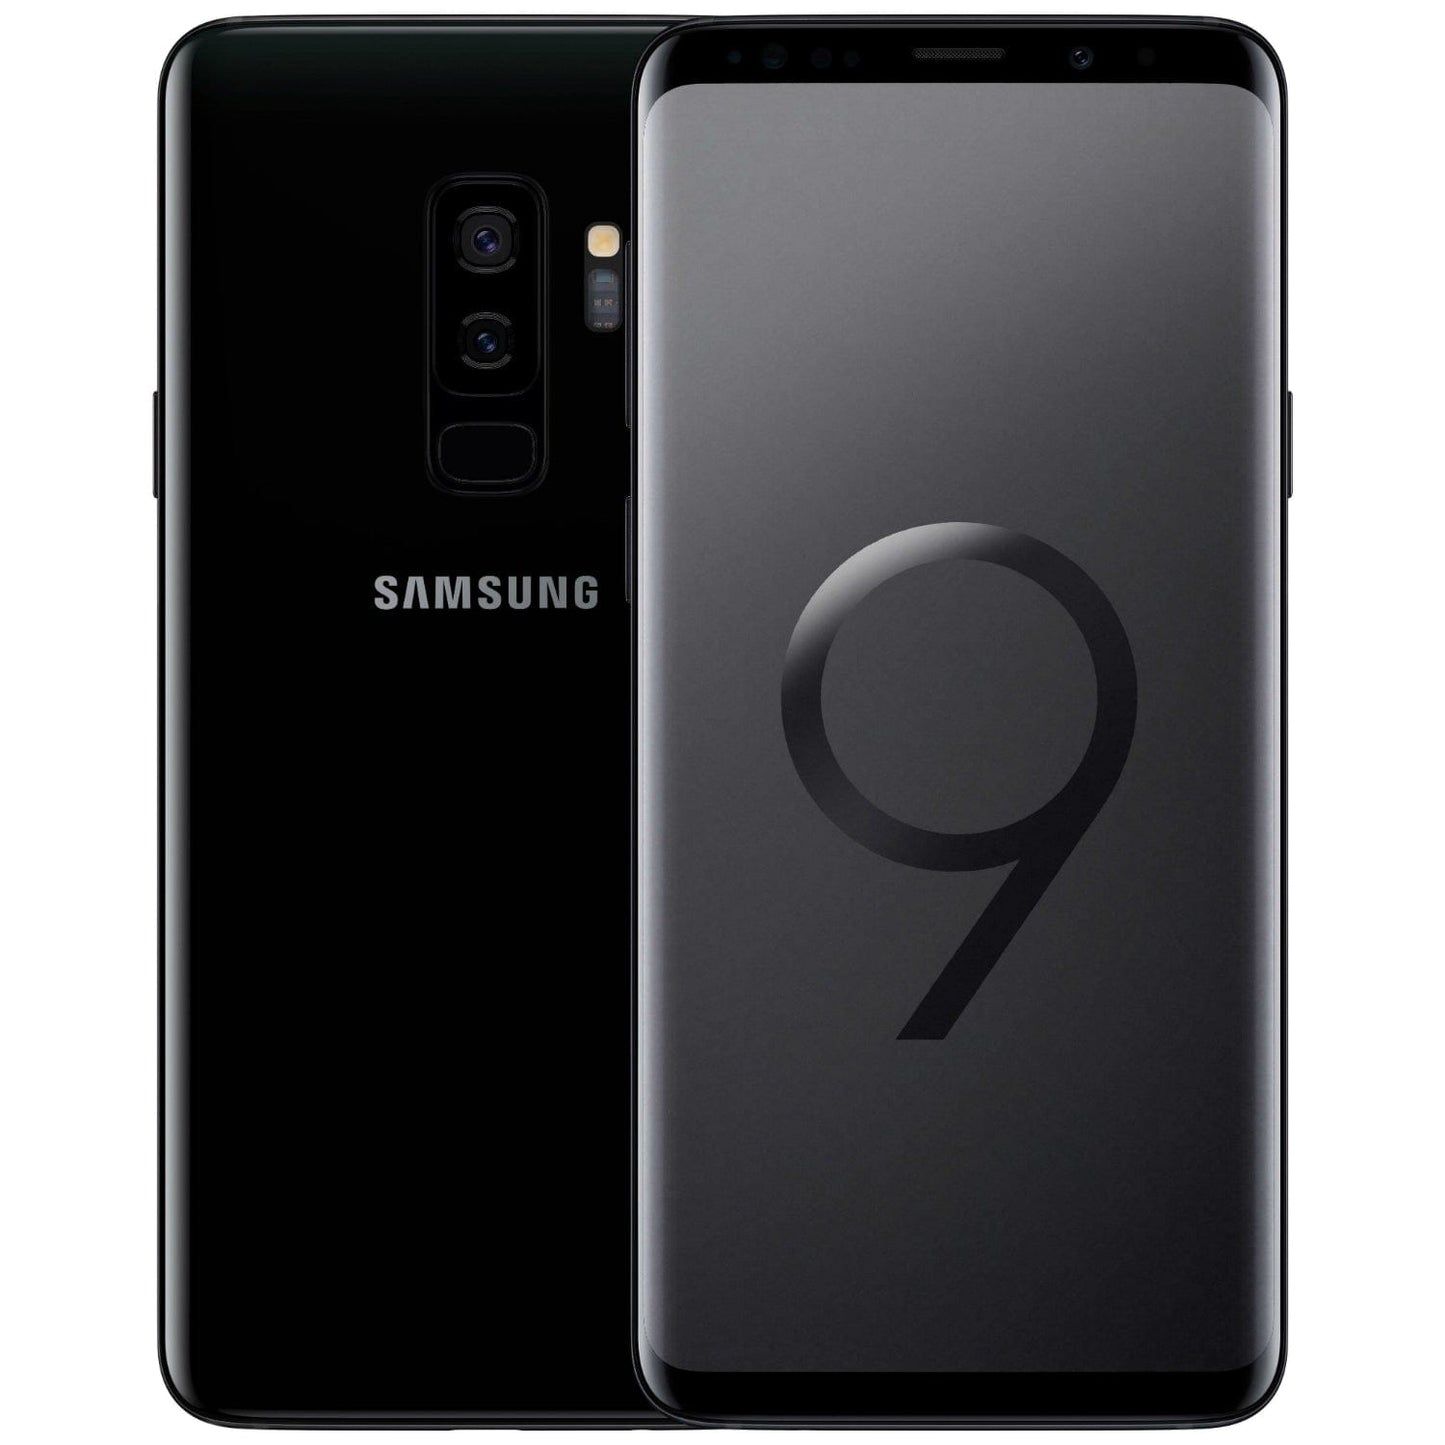 Samsung Galaxy S9+ - 64 GB - Midnight Black - Unlocked - GSM